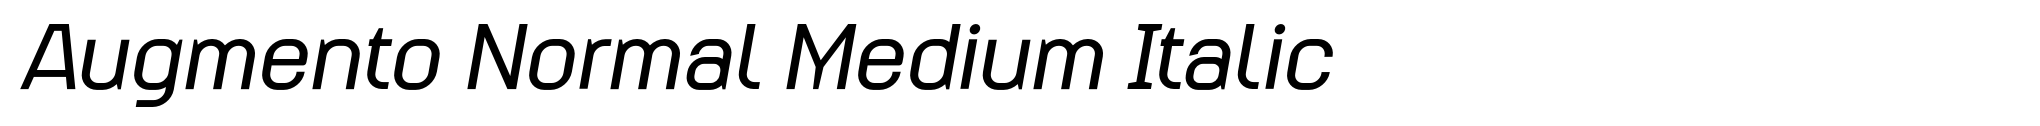 Augmento Normal Medium Italic image